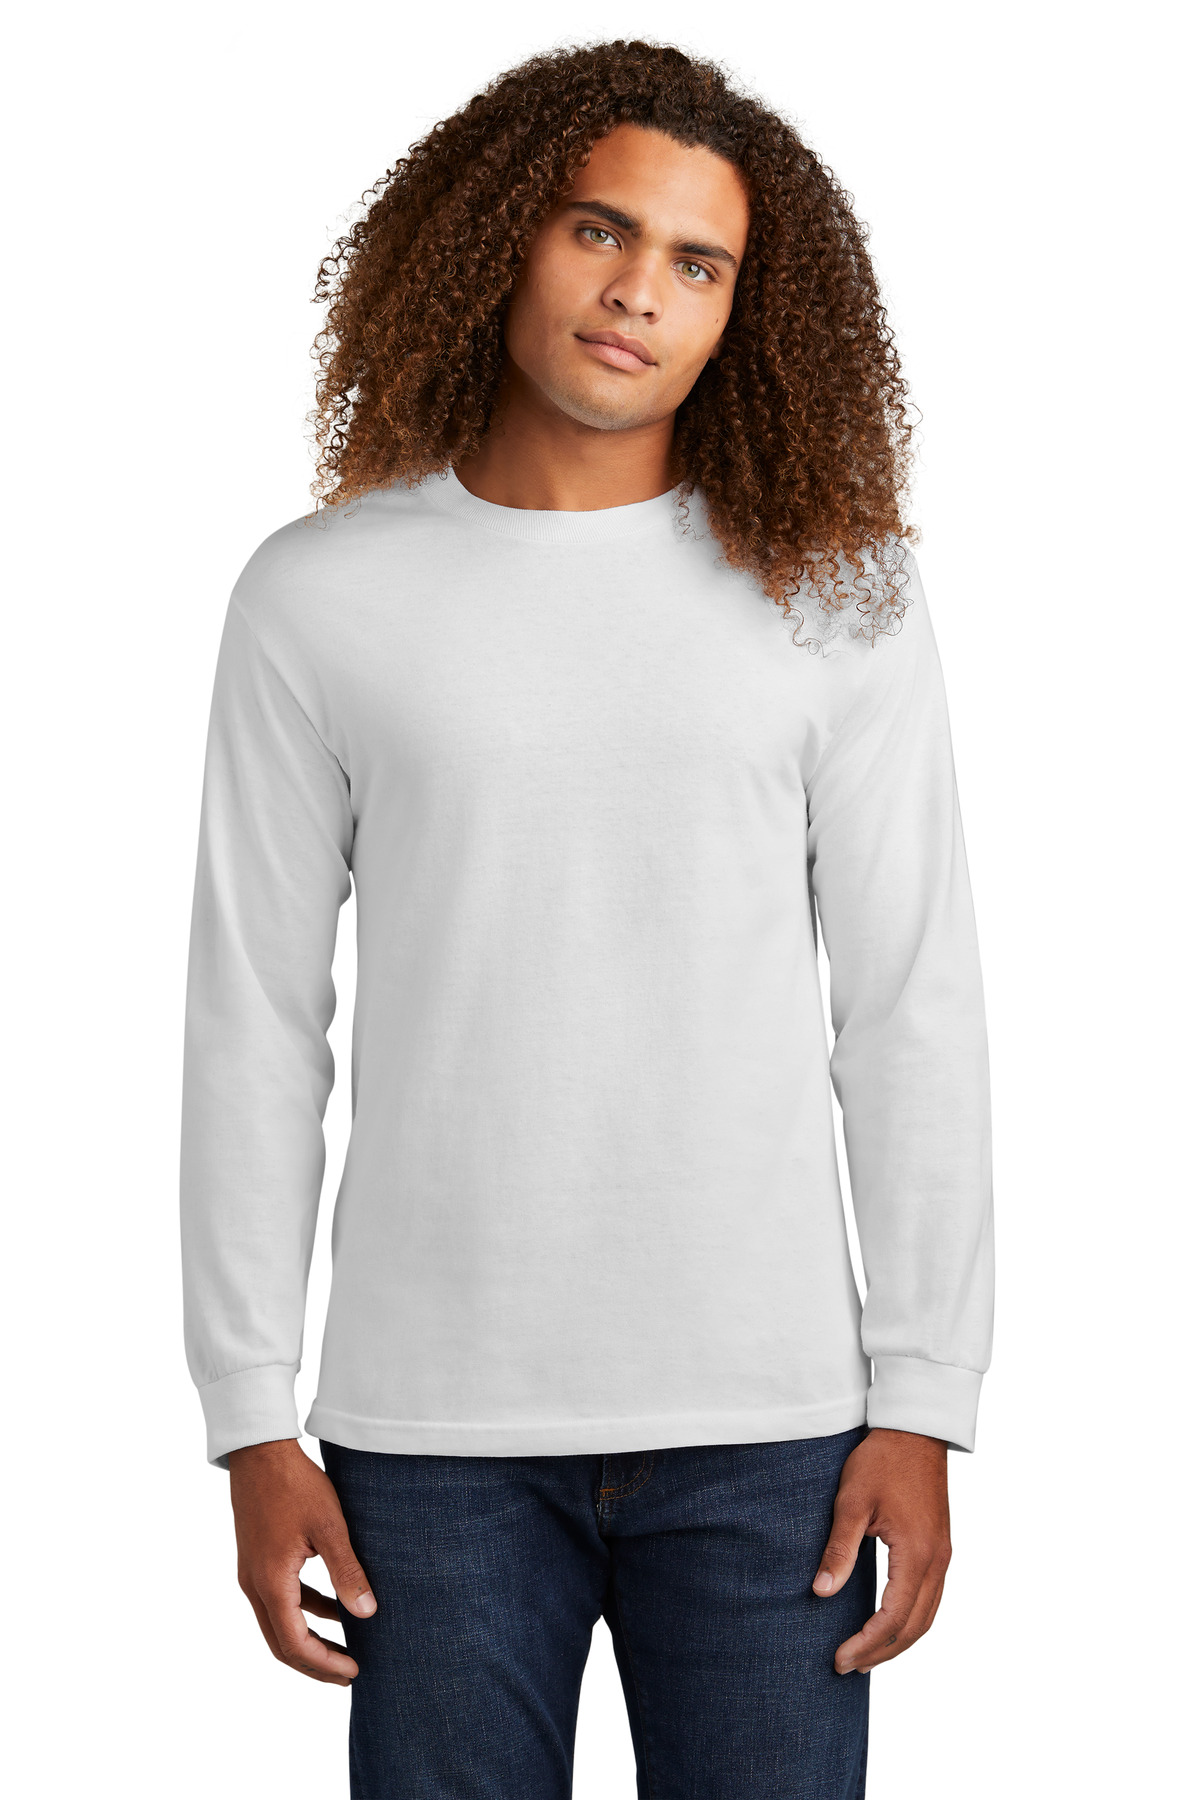 American Apparel Heavyweight Unisex Long Sleeve T-Shirt-American Apparel